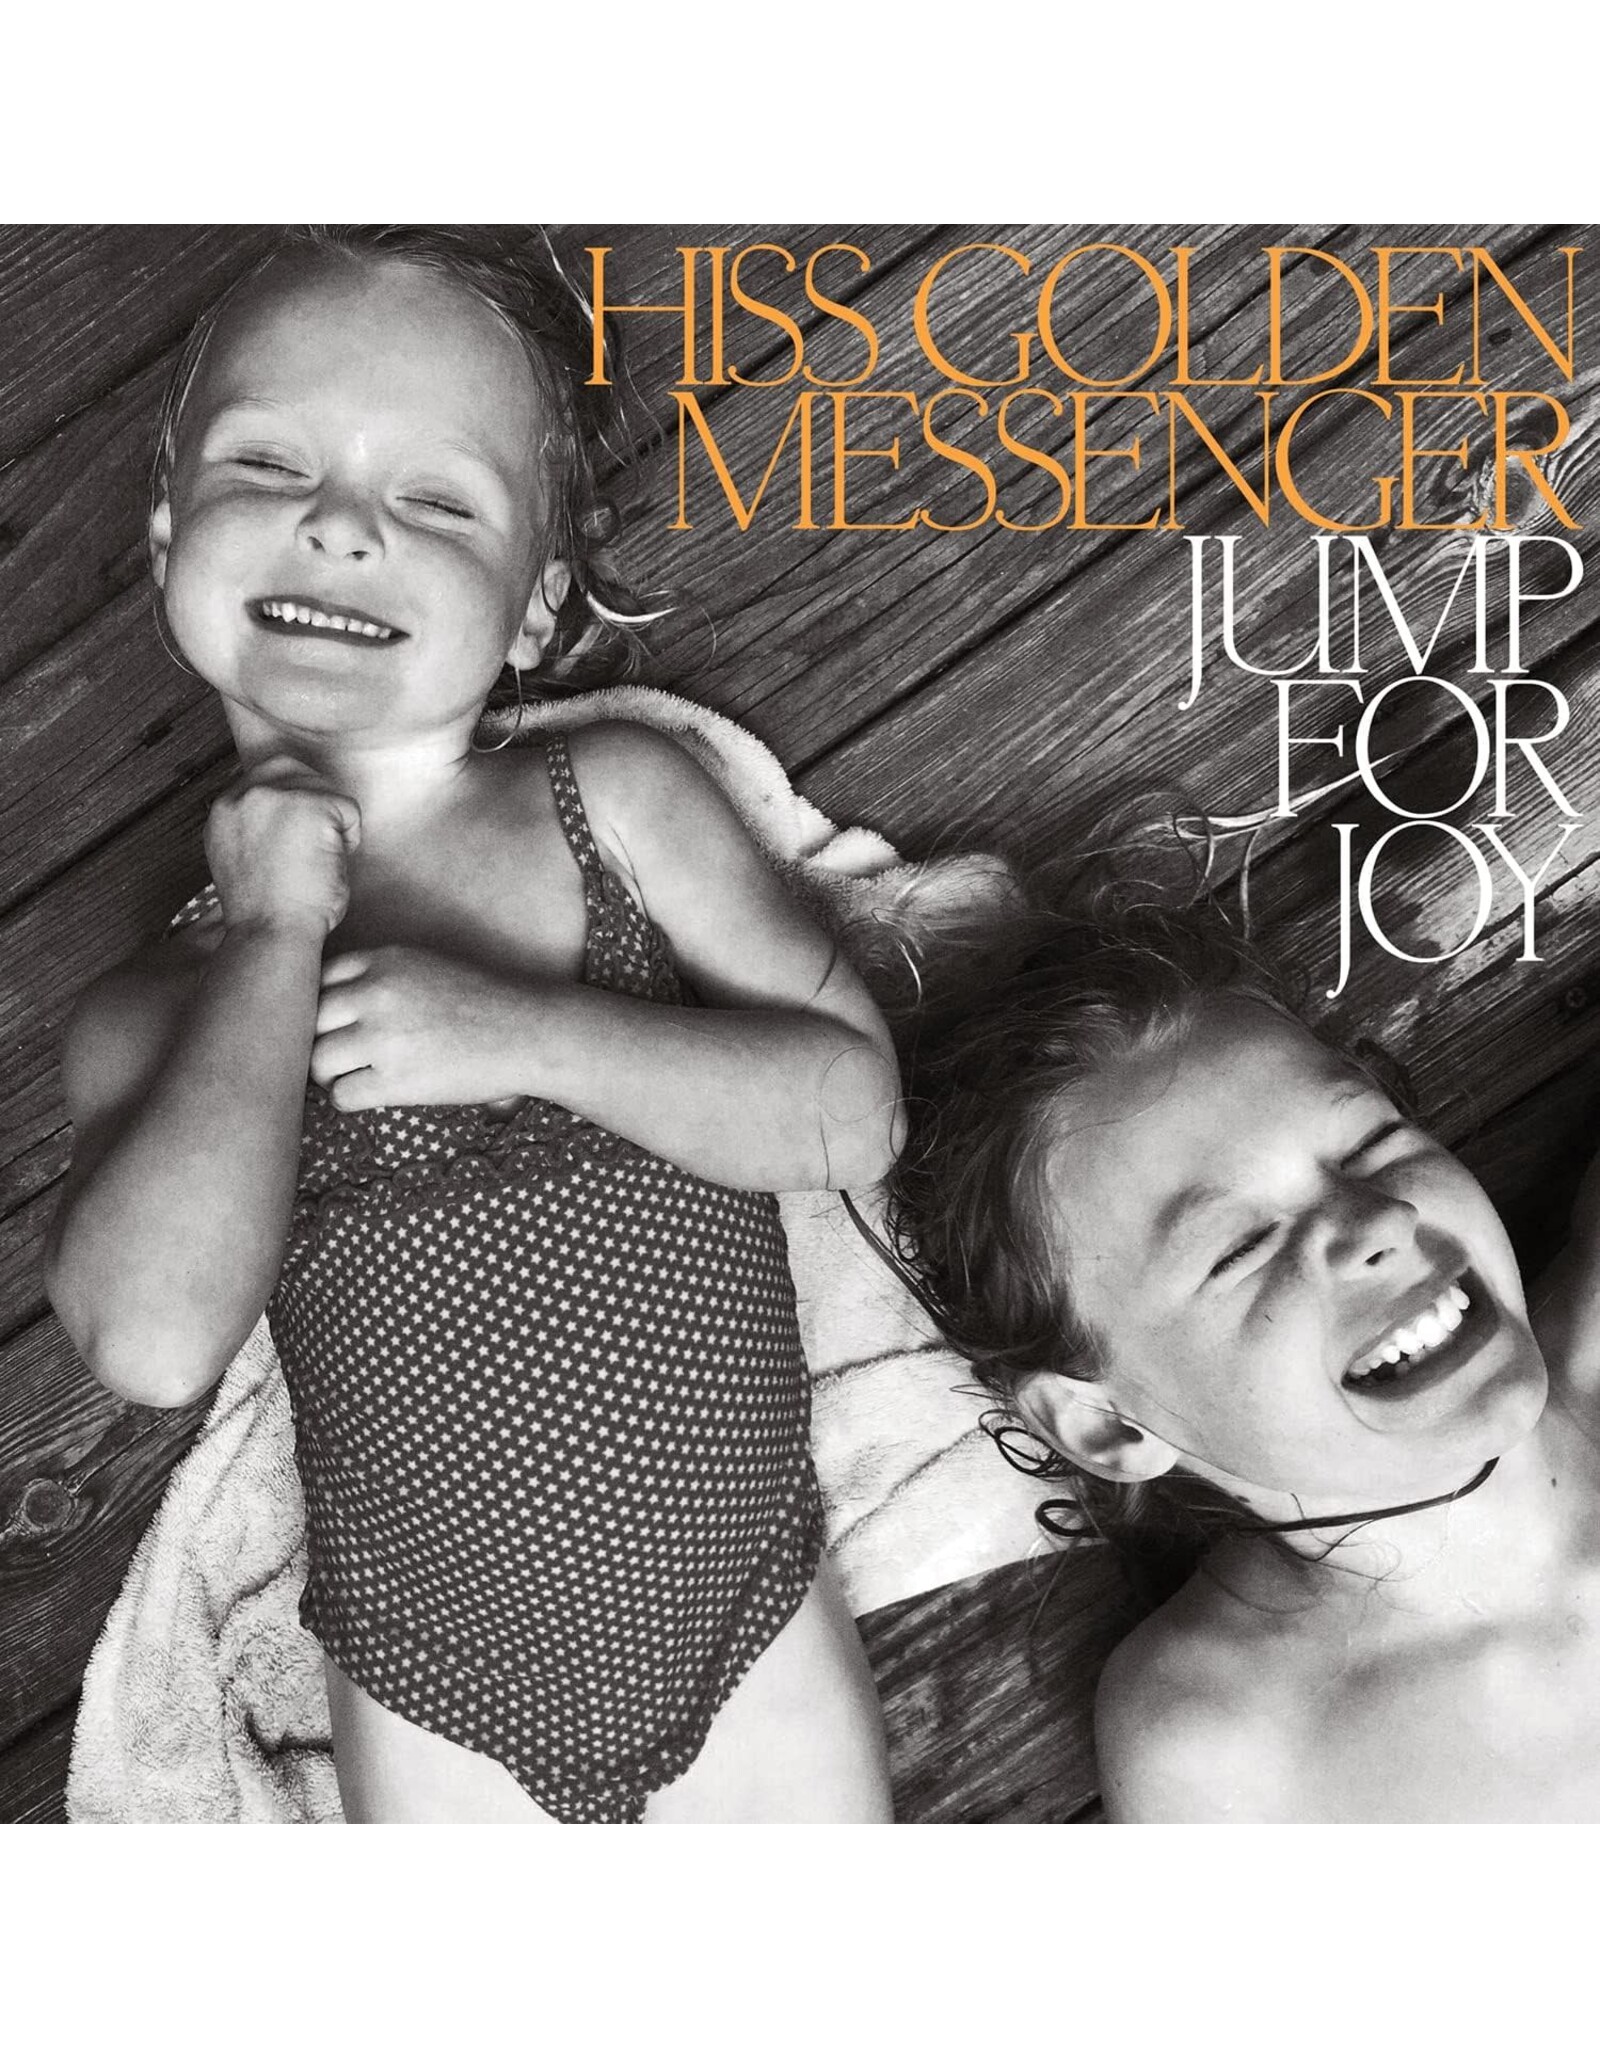 Hiss Golden Messenger - Jump For Joy (Exclusive Orange & Black Swirl Vinyl)